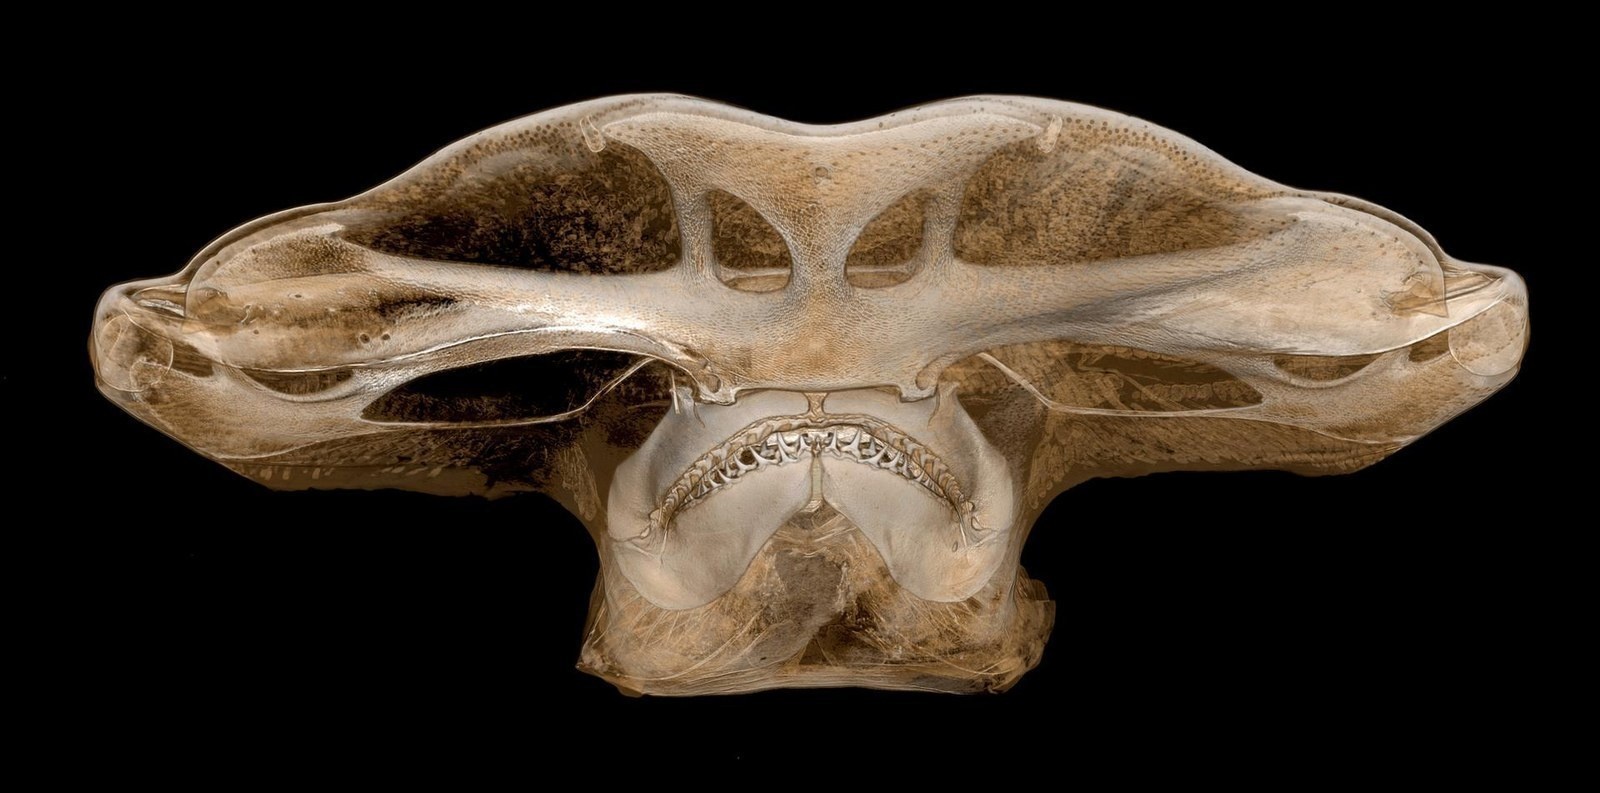 An x-ray of the distinctive hammerhead shark. These sharks tend to feast on stingrays.